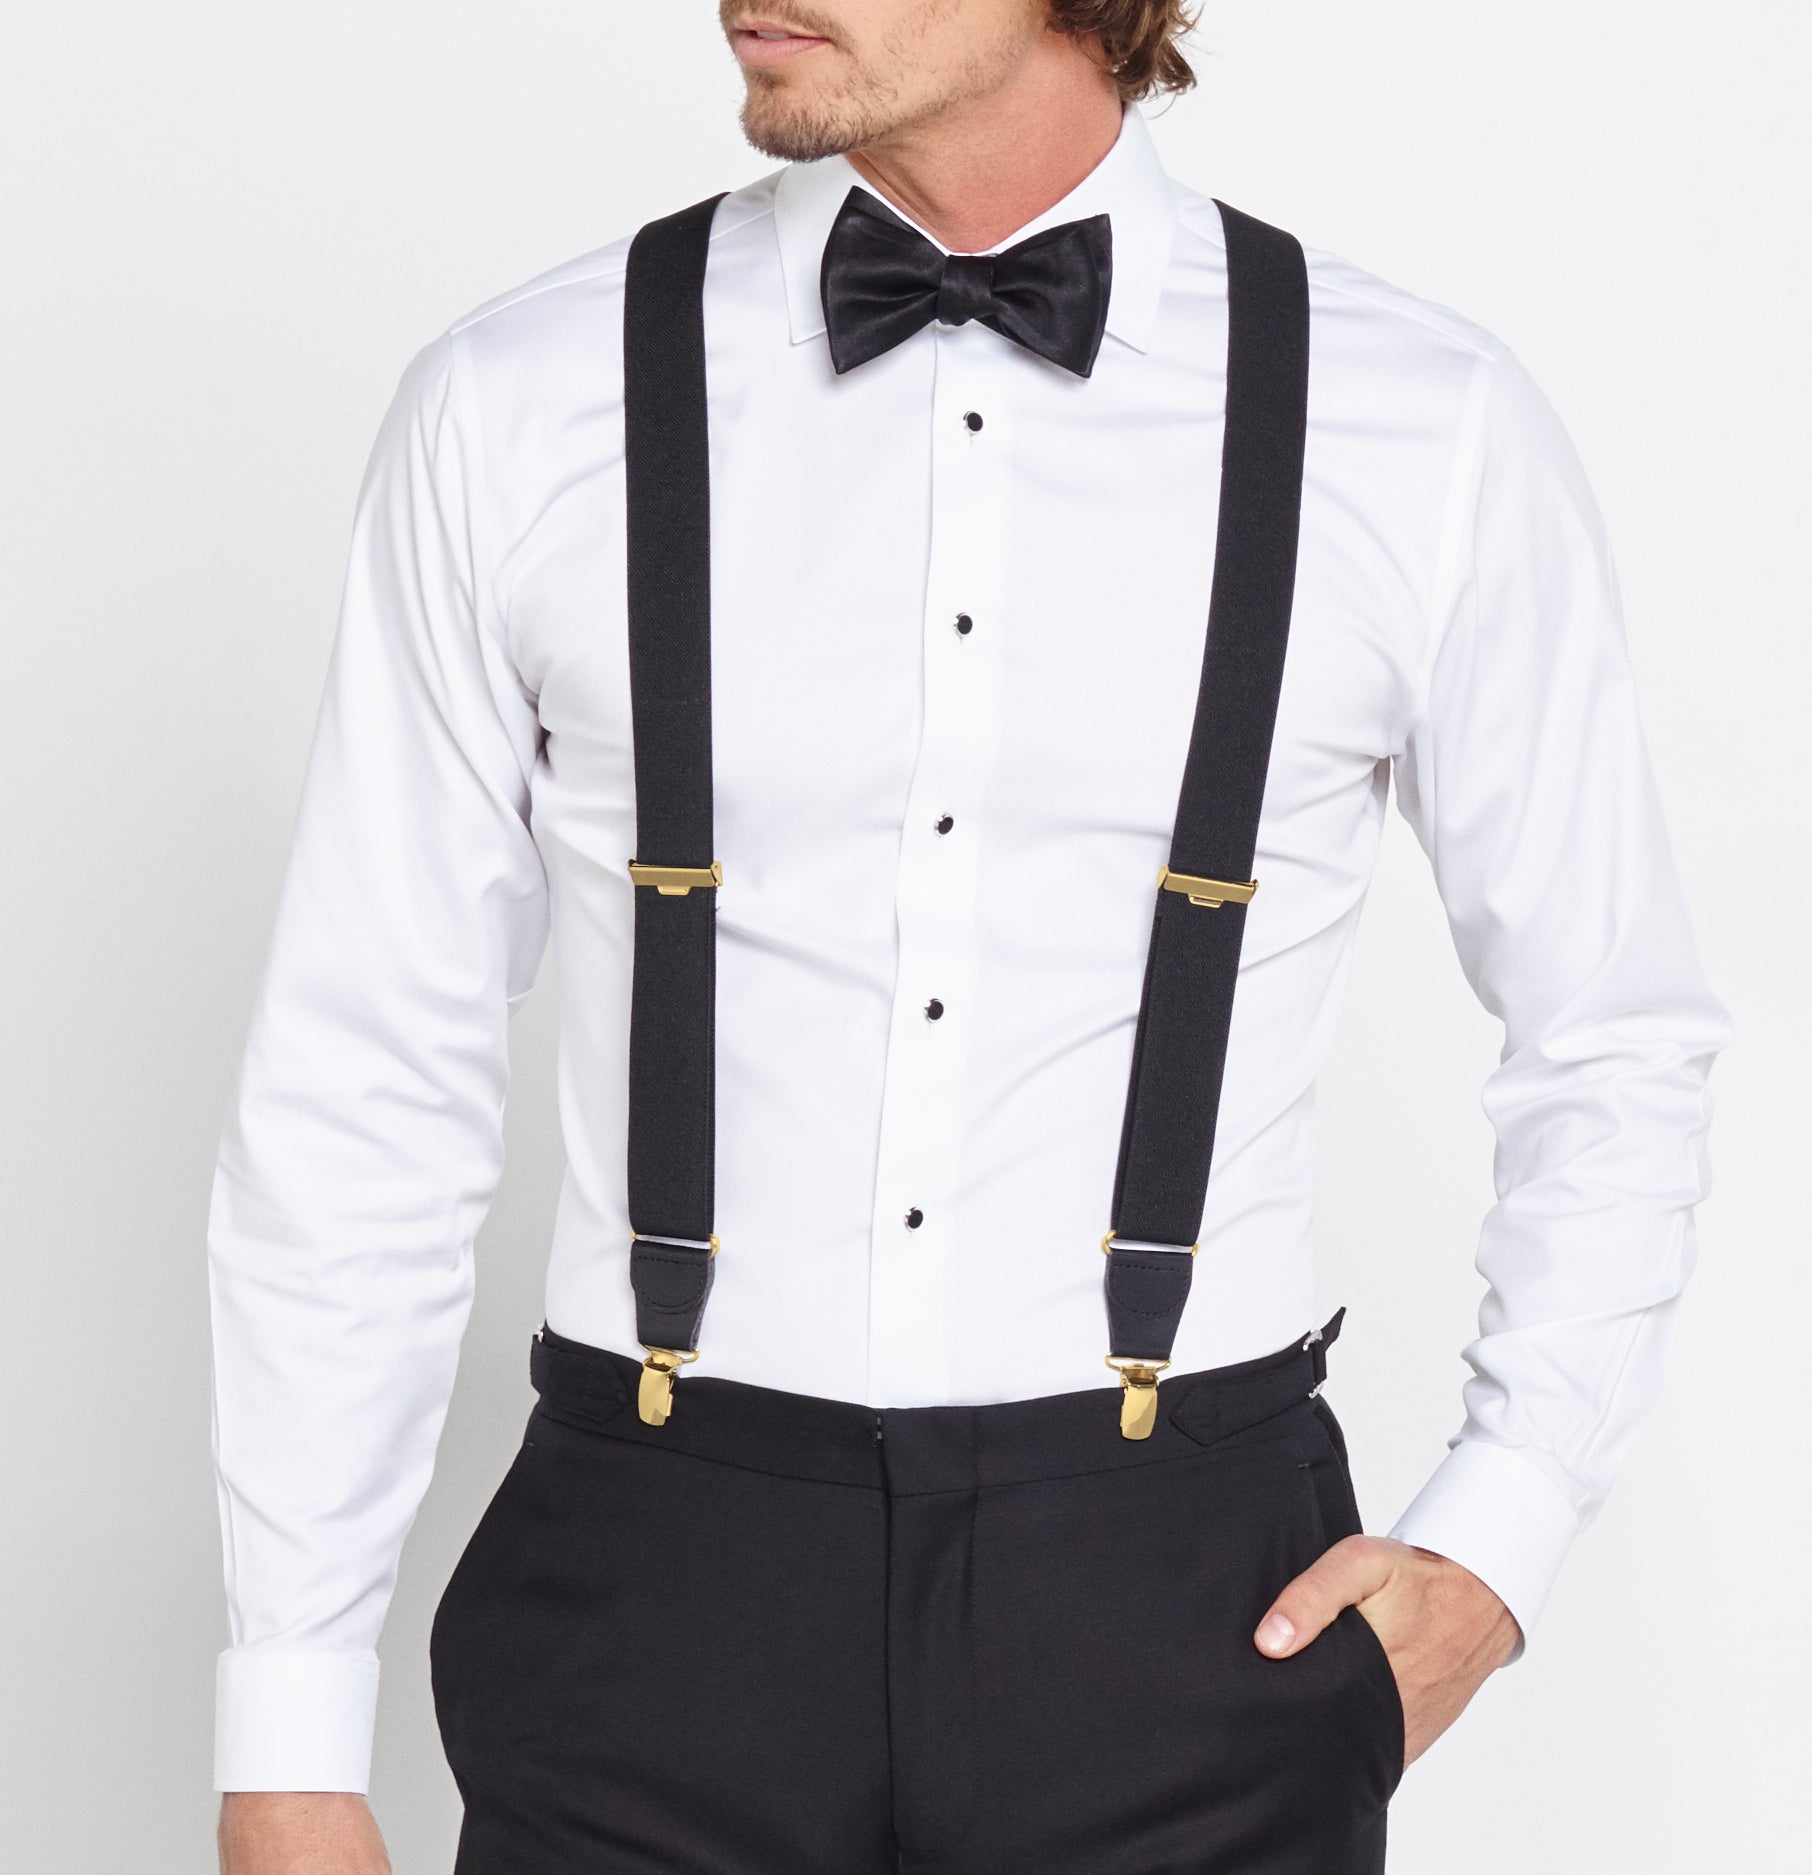 Hold-Ups XL Tuxedo Black Satin Finish 1 Wide, X-back Style Suspenders ...